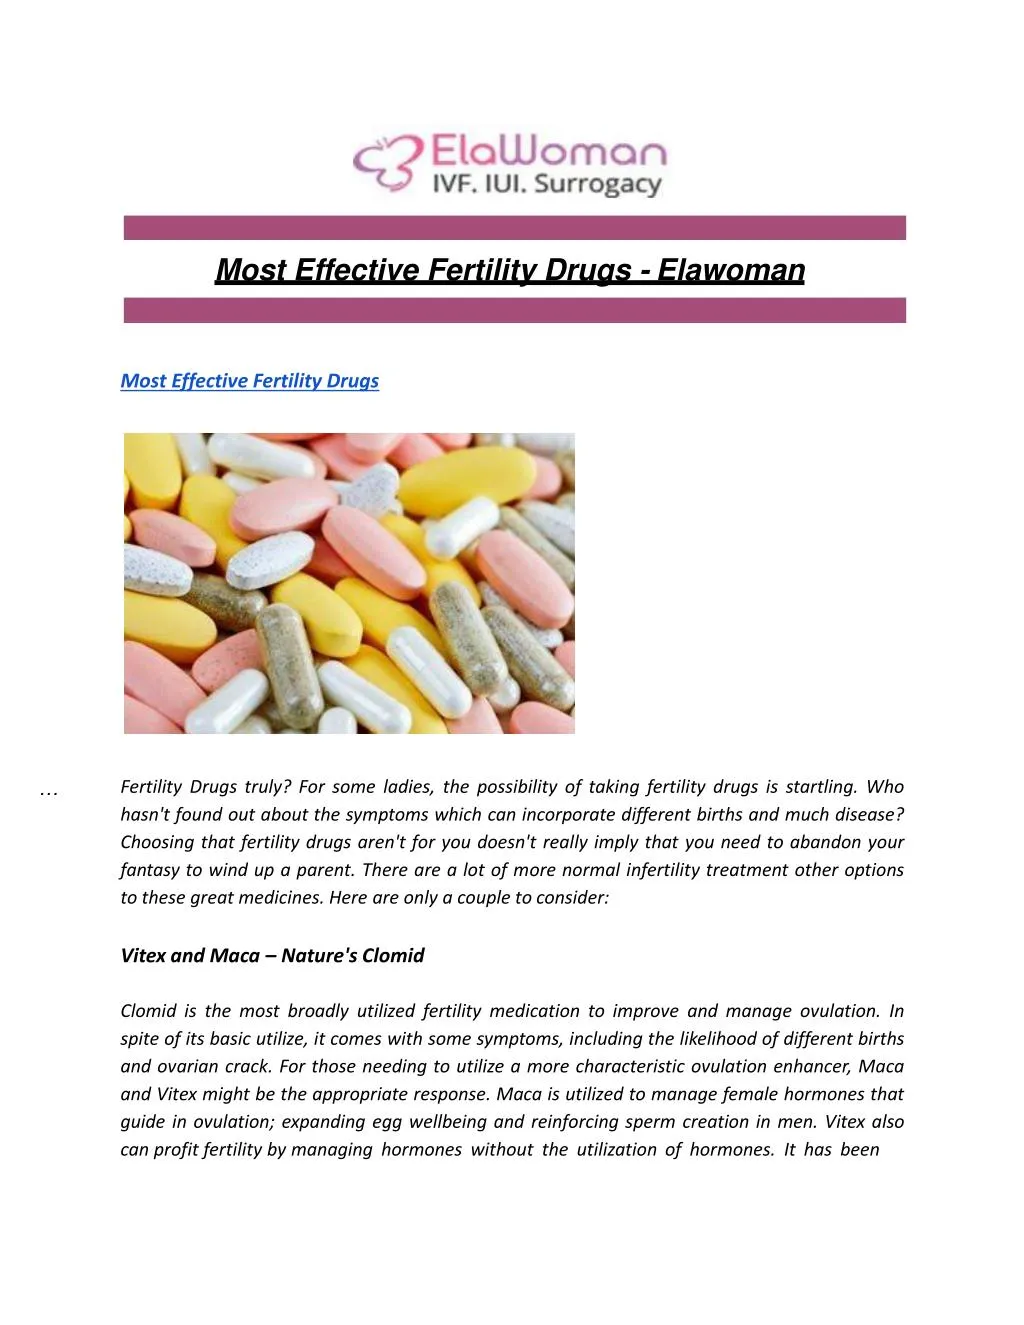 most effective fertility drugs elawoman